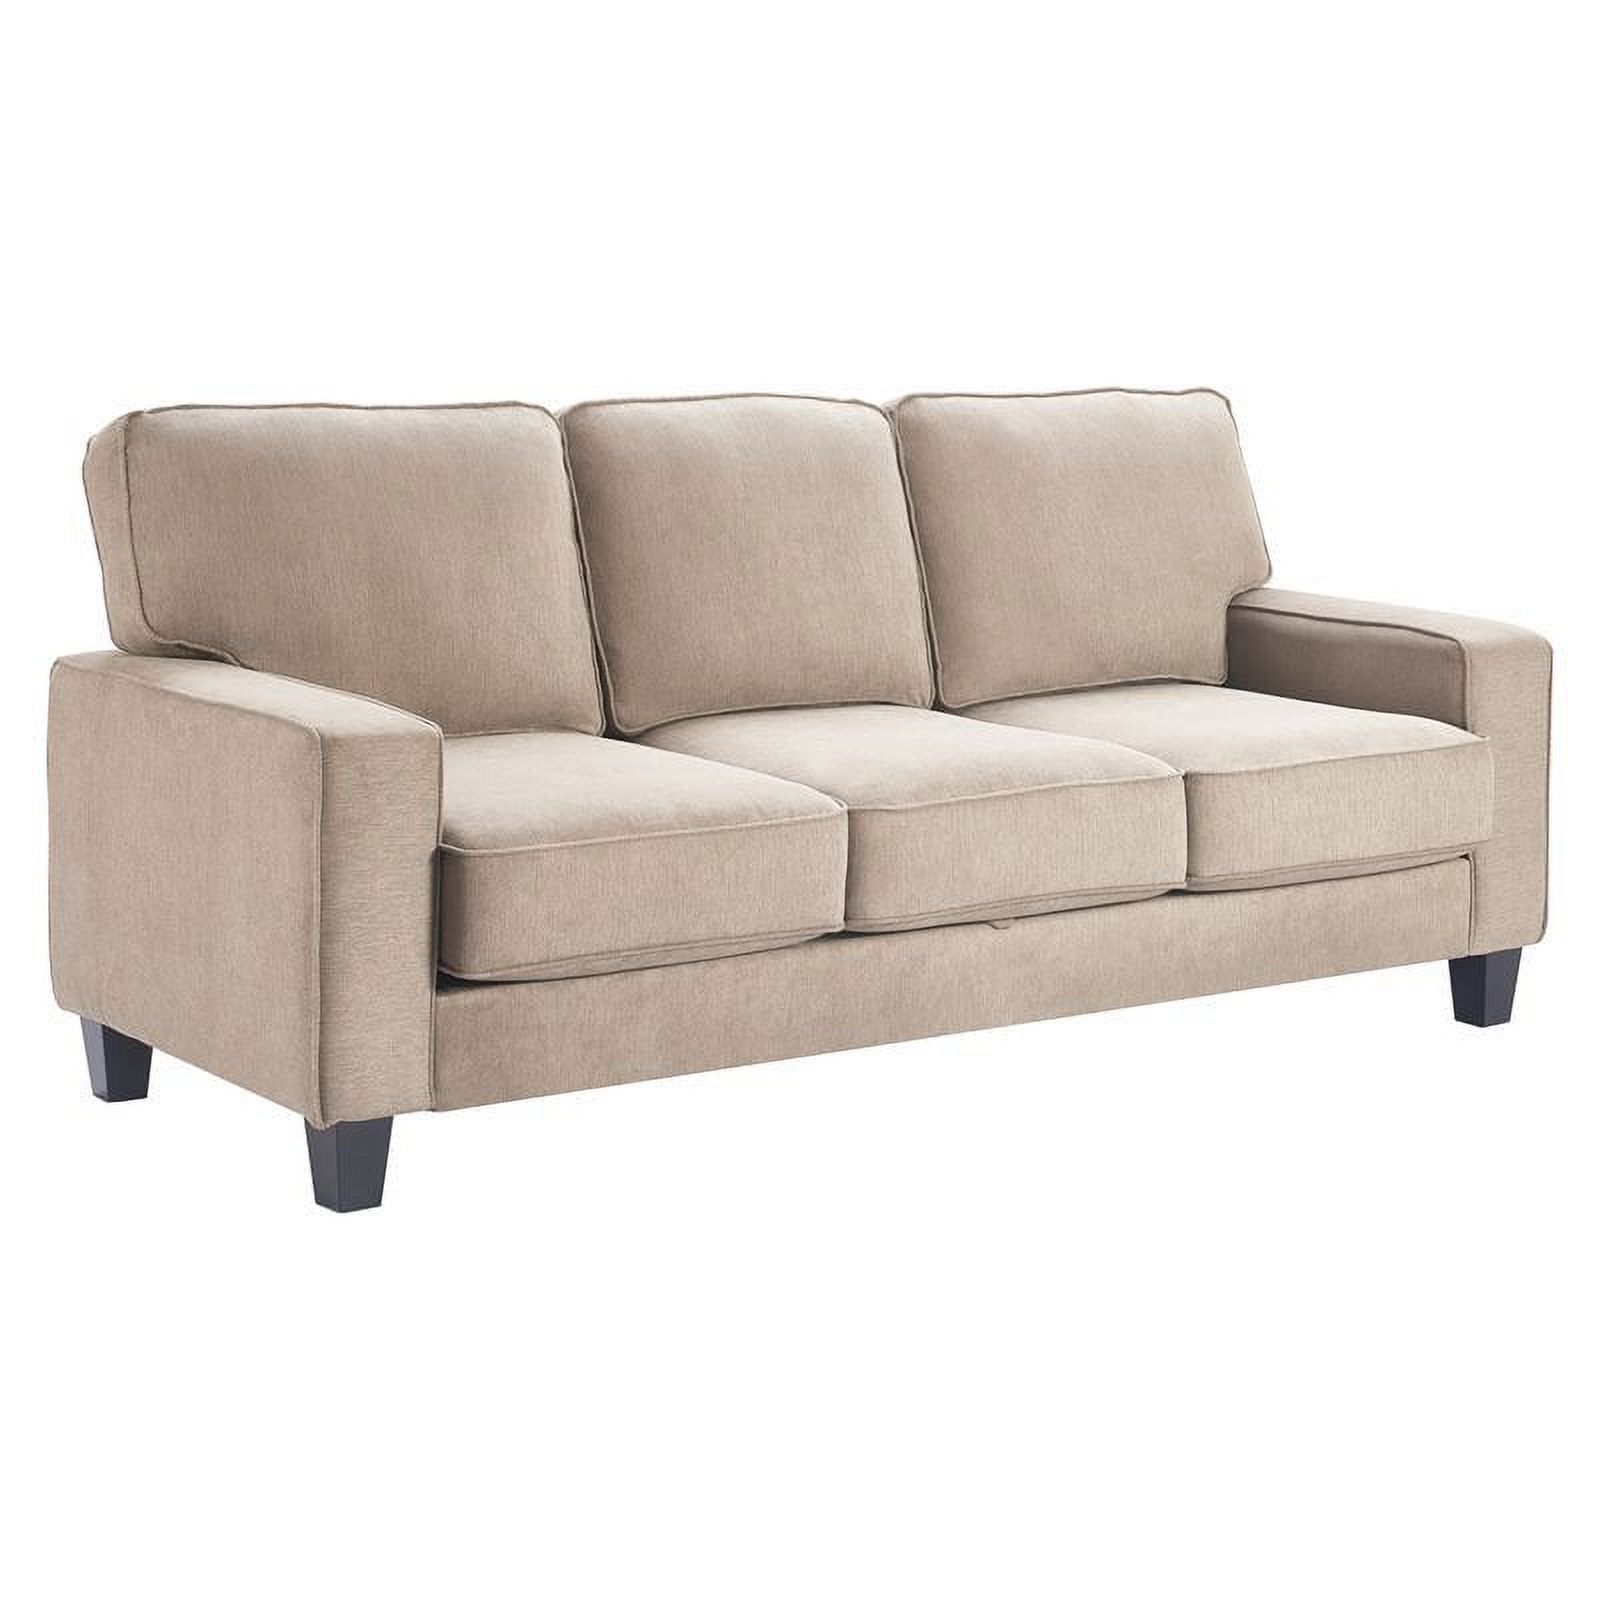 Serta Palisades 80" Track Arm Fabric Sofa with Storage Soft Beige - image 2 of 5